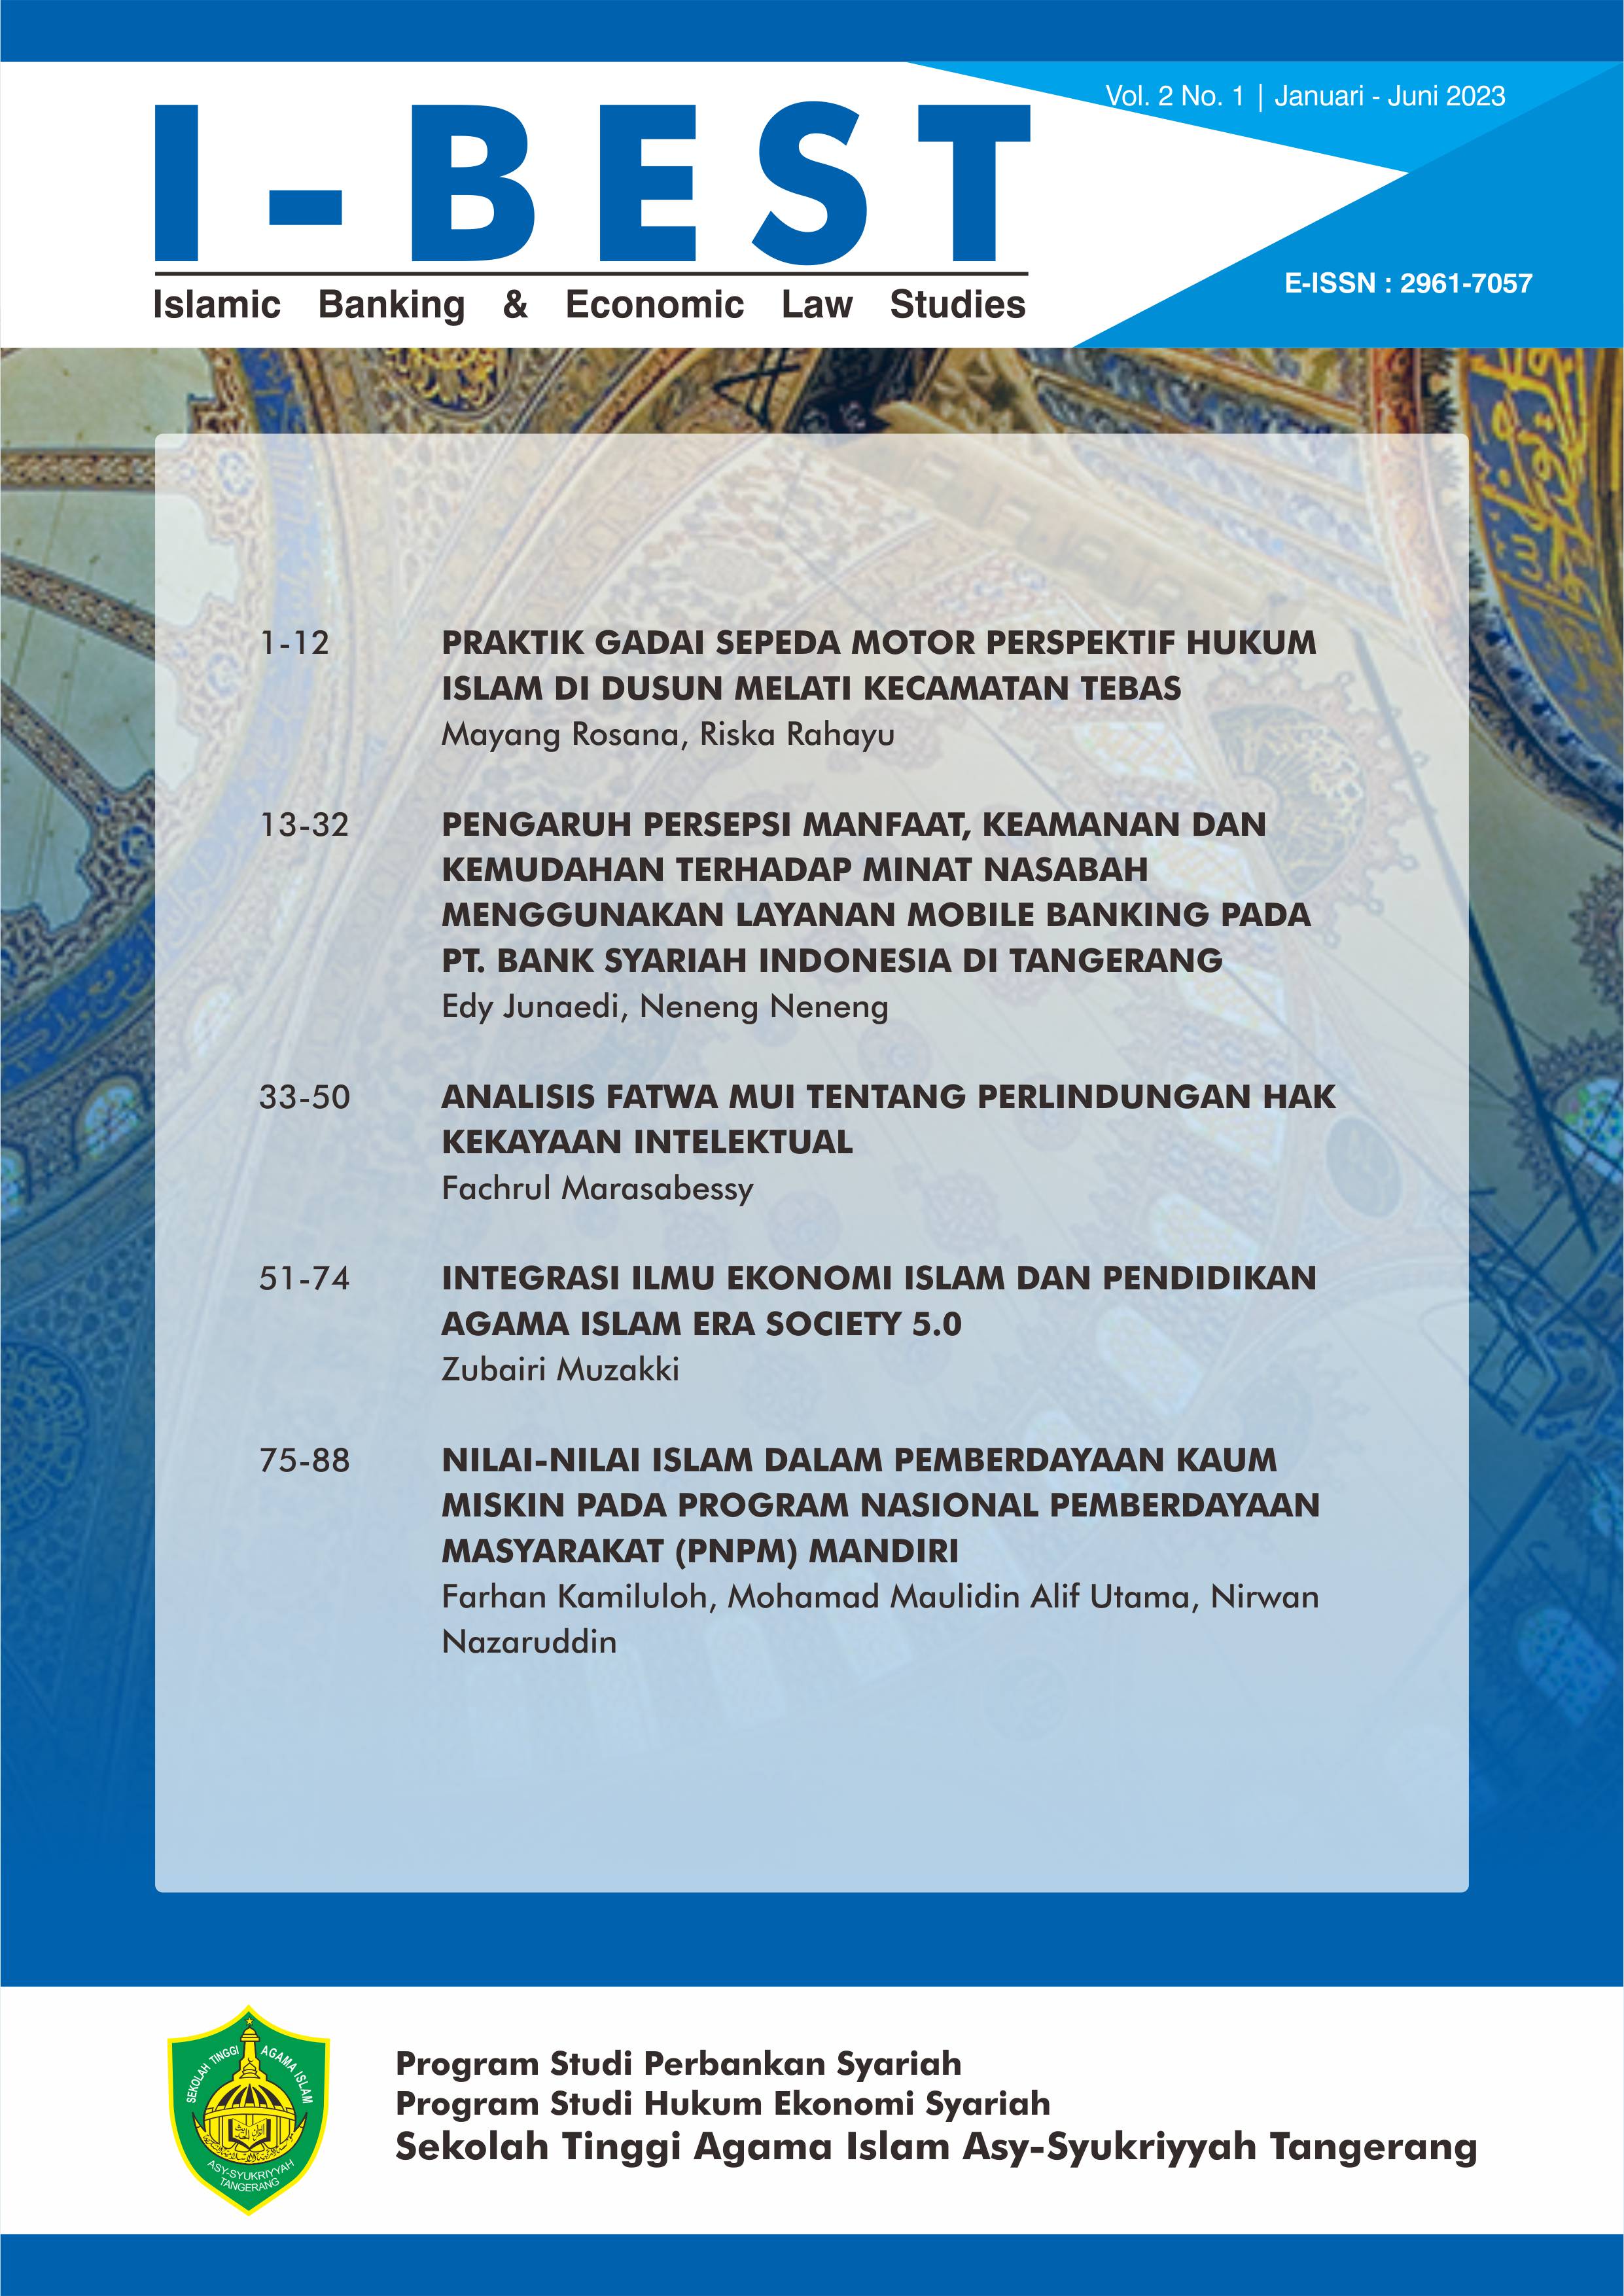 					View Vol. 2 No. 1 (2023): I-BEST: ISLAMIC BANKING & ECONOMIC LAW STUDIES
				